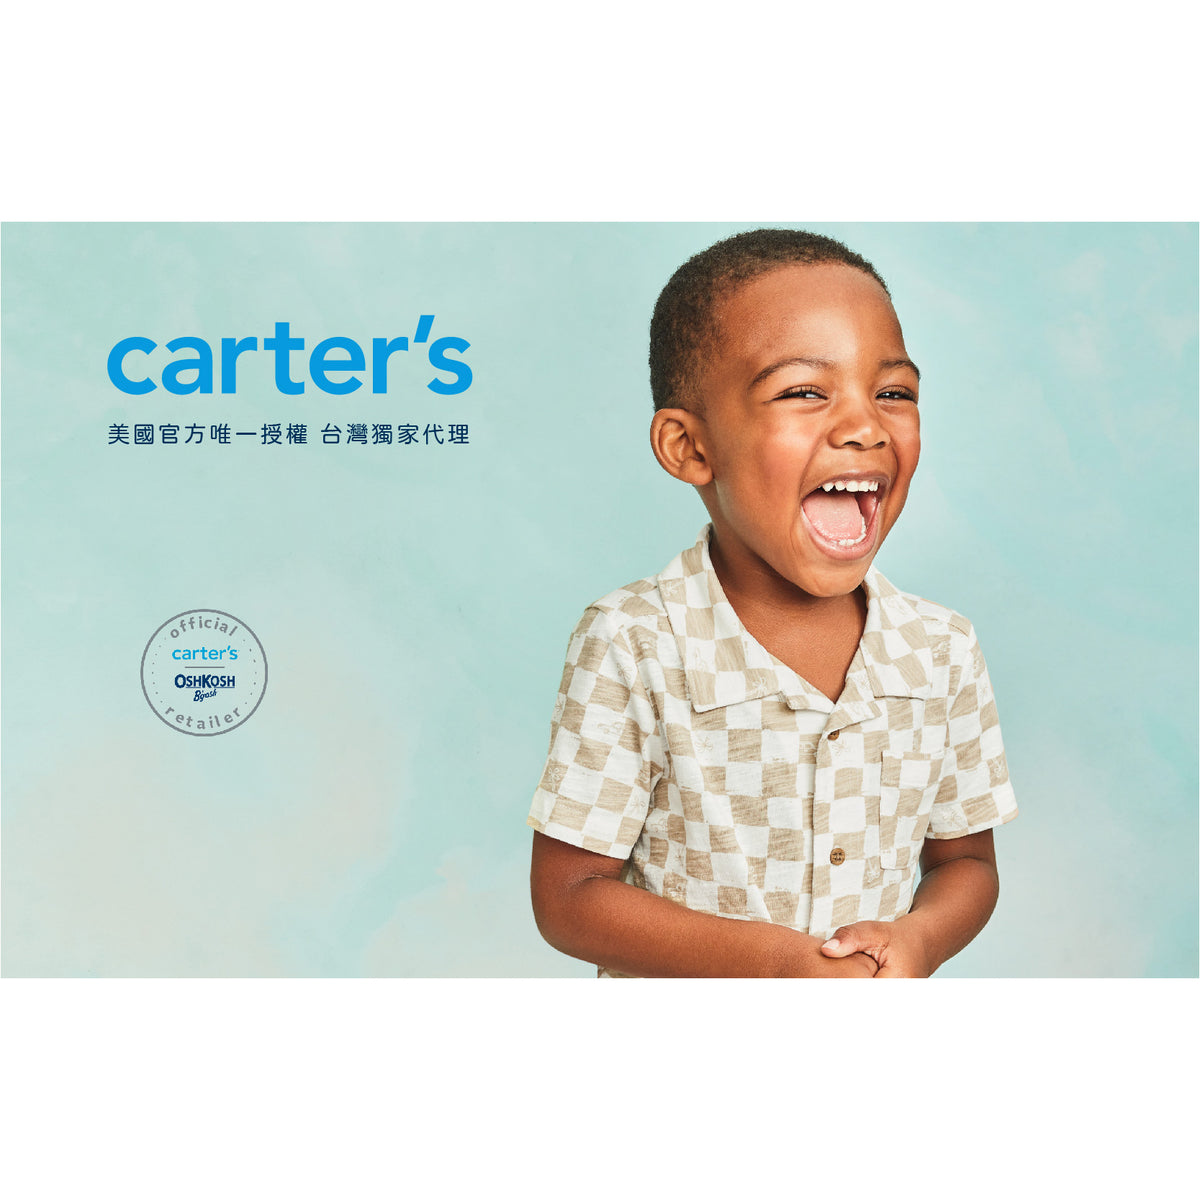 Carter's 格子藍襯衫2件組套裝(2T-5T)